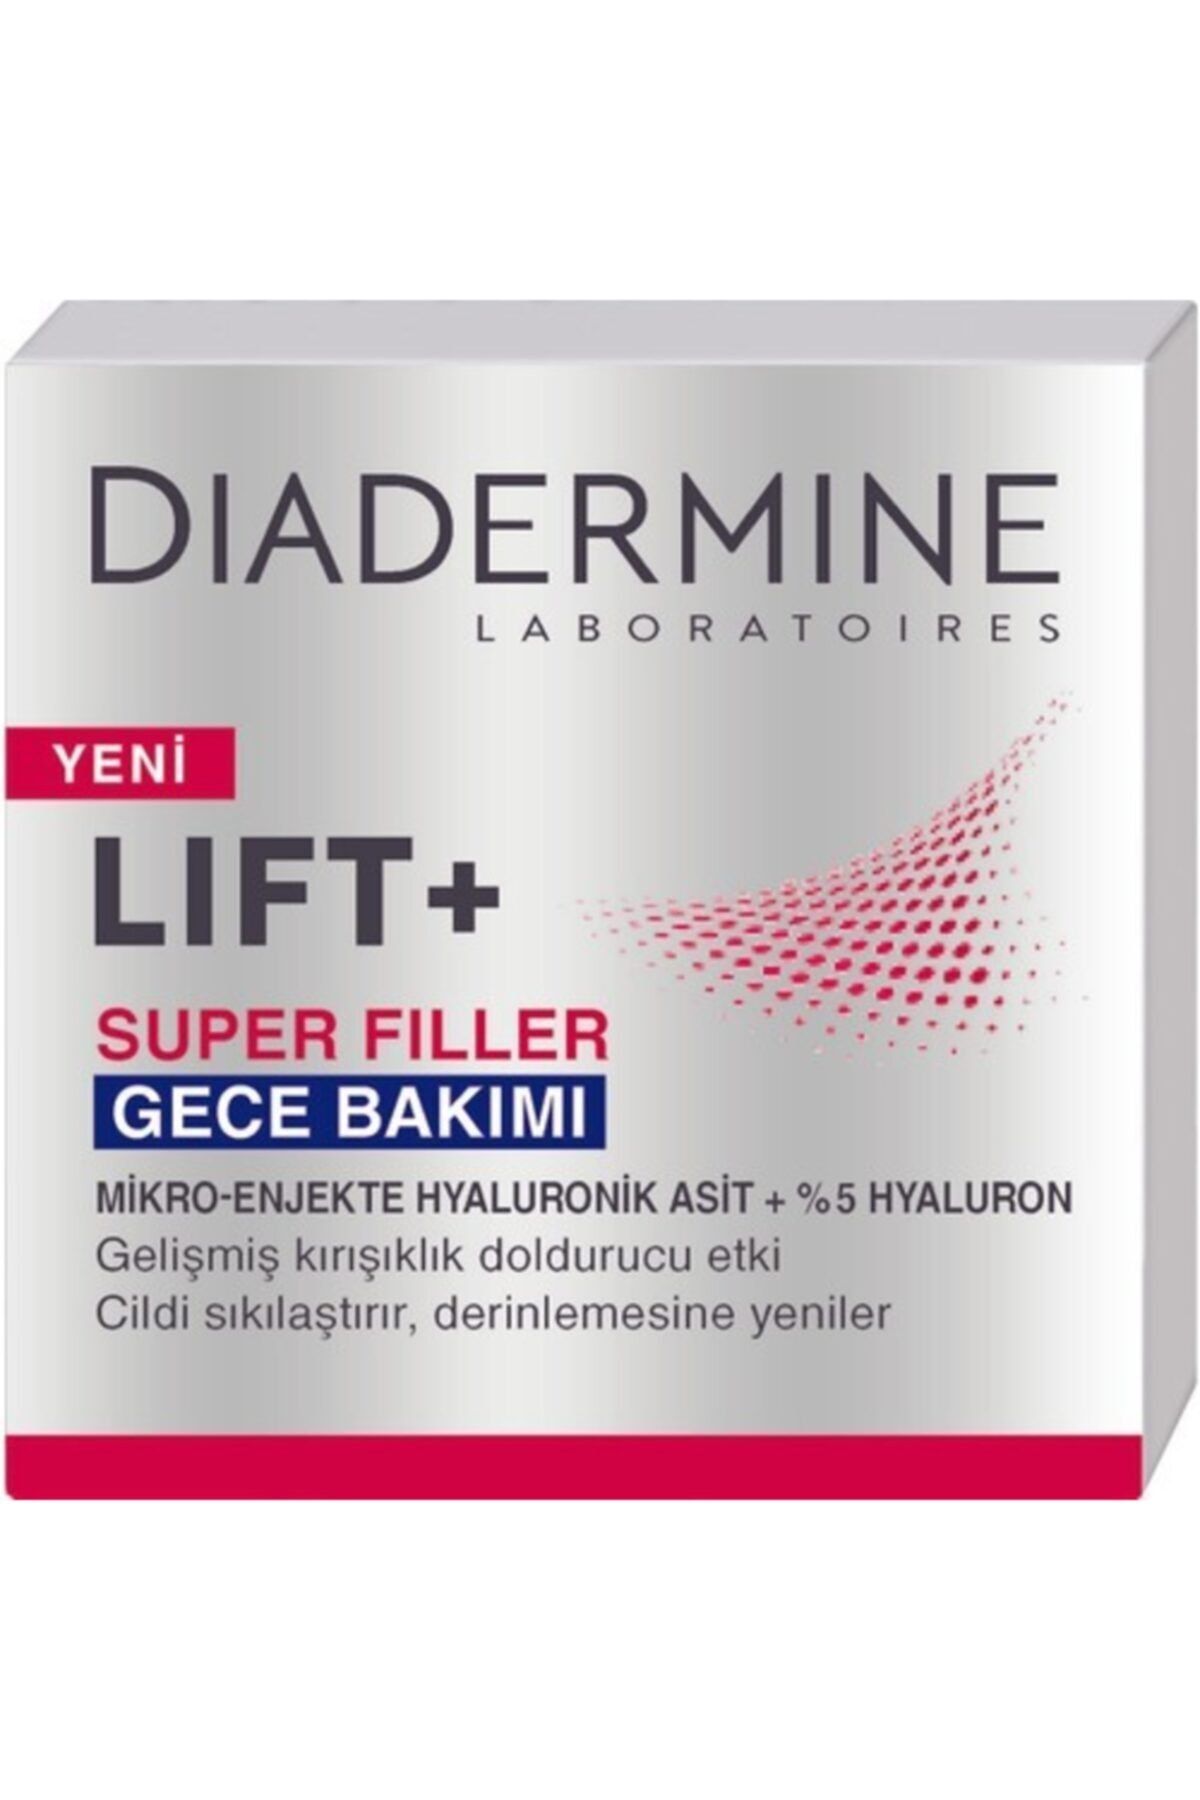 Diadermine Lıft+ Super Filler Gece Kremi 50 ml